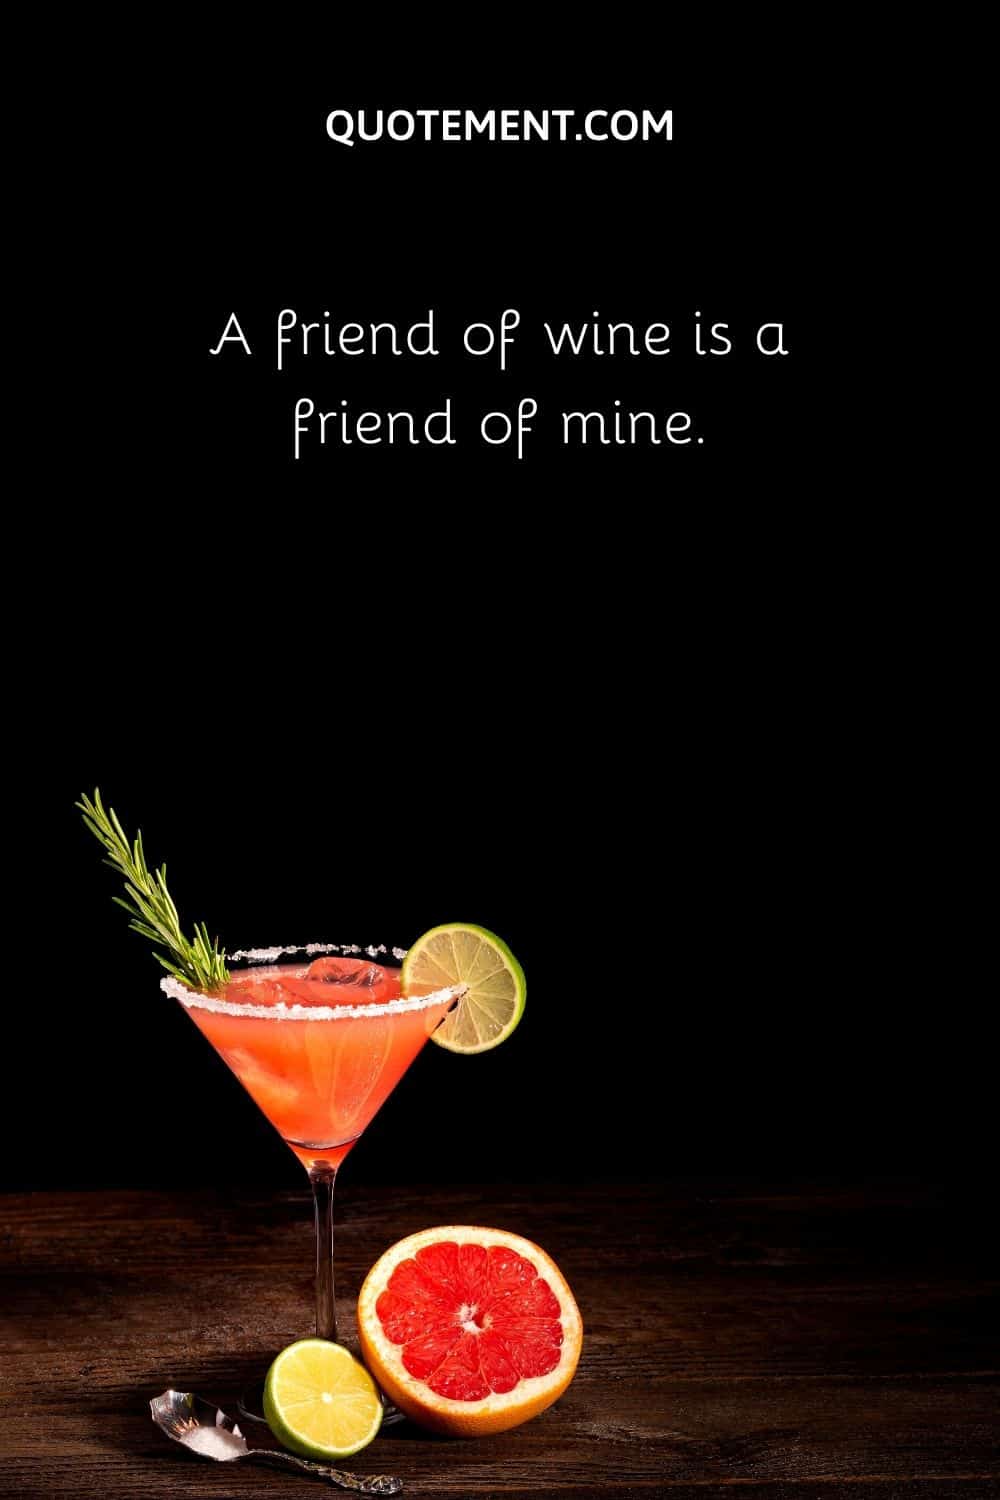 A friend of wine is a friend of mine.